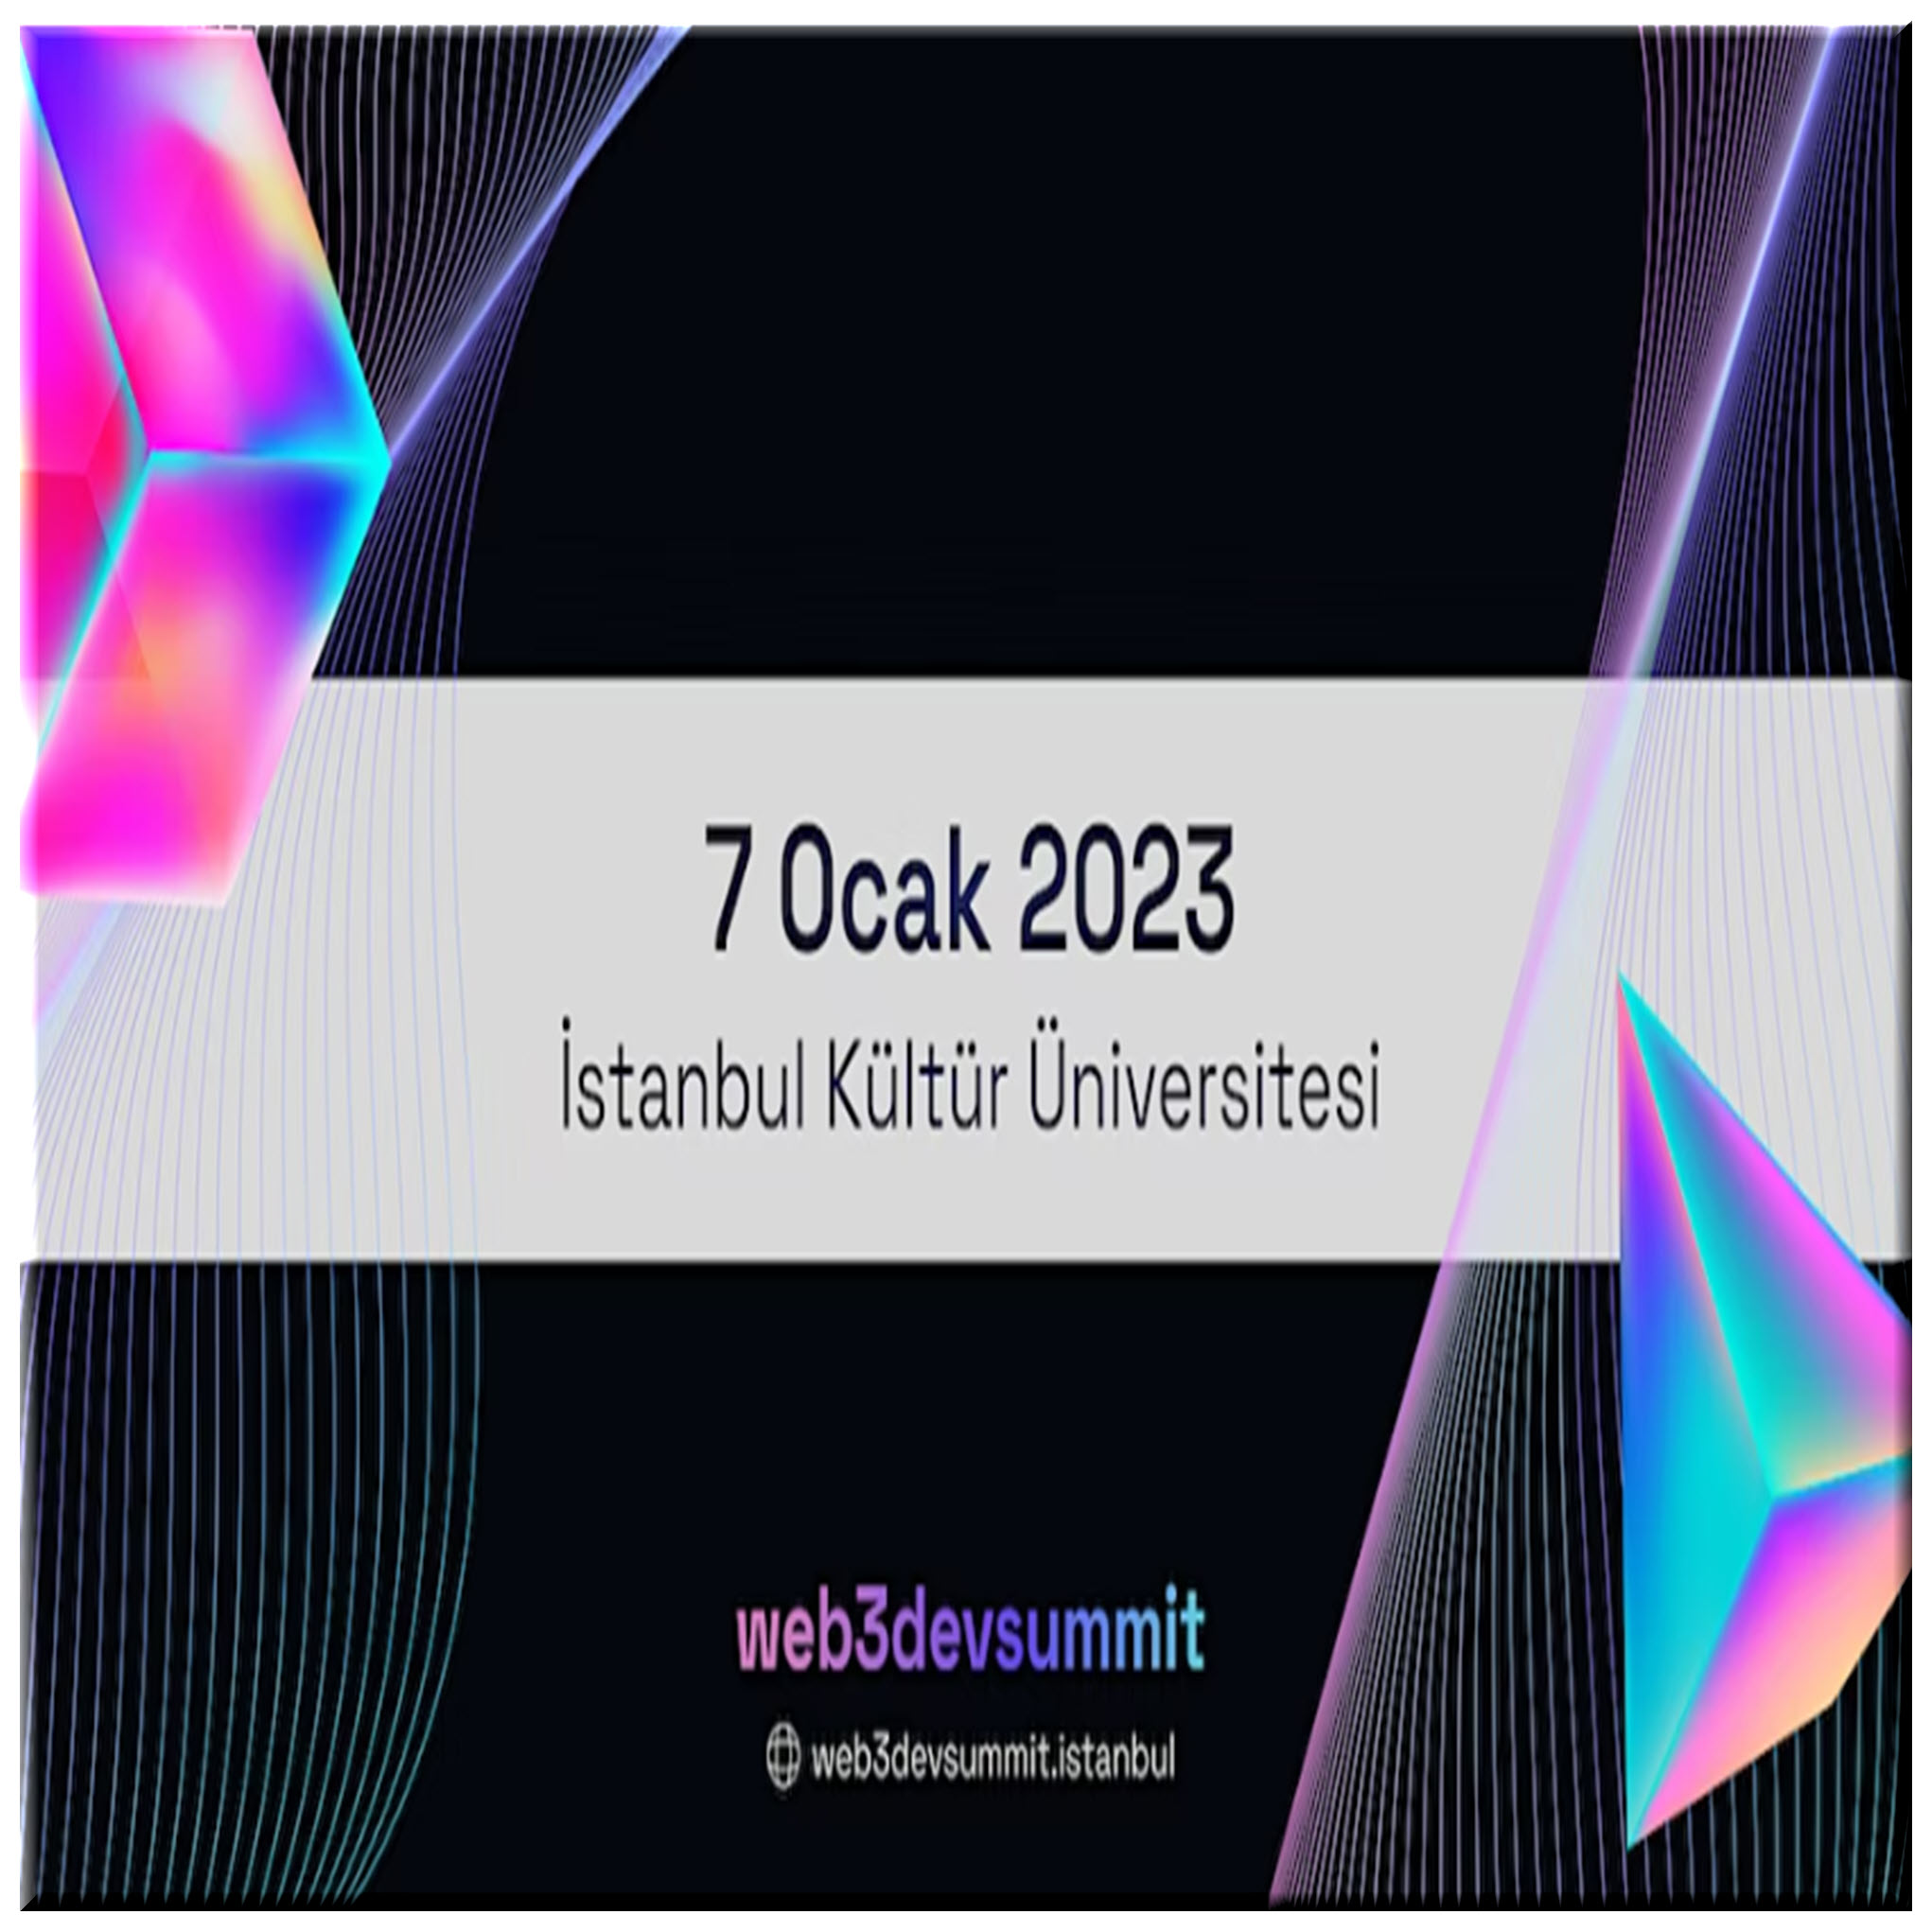 Web3 Developer Summit 2023 Istanbul